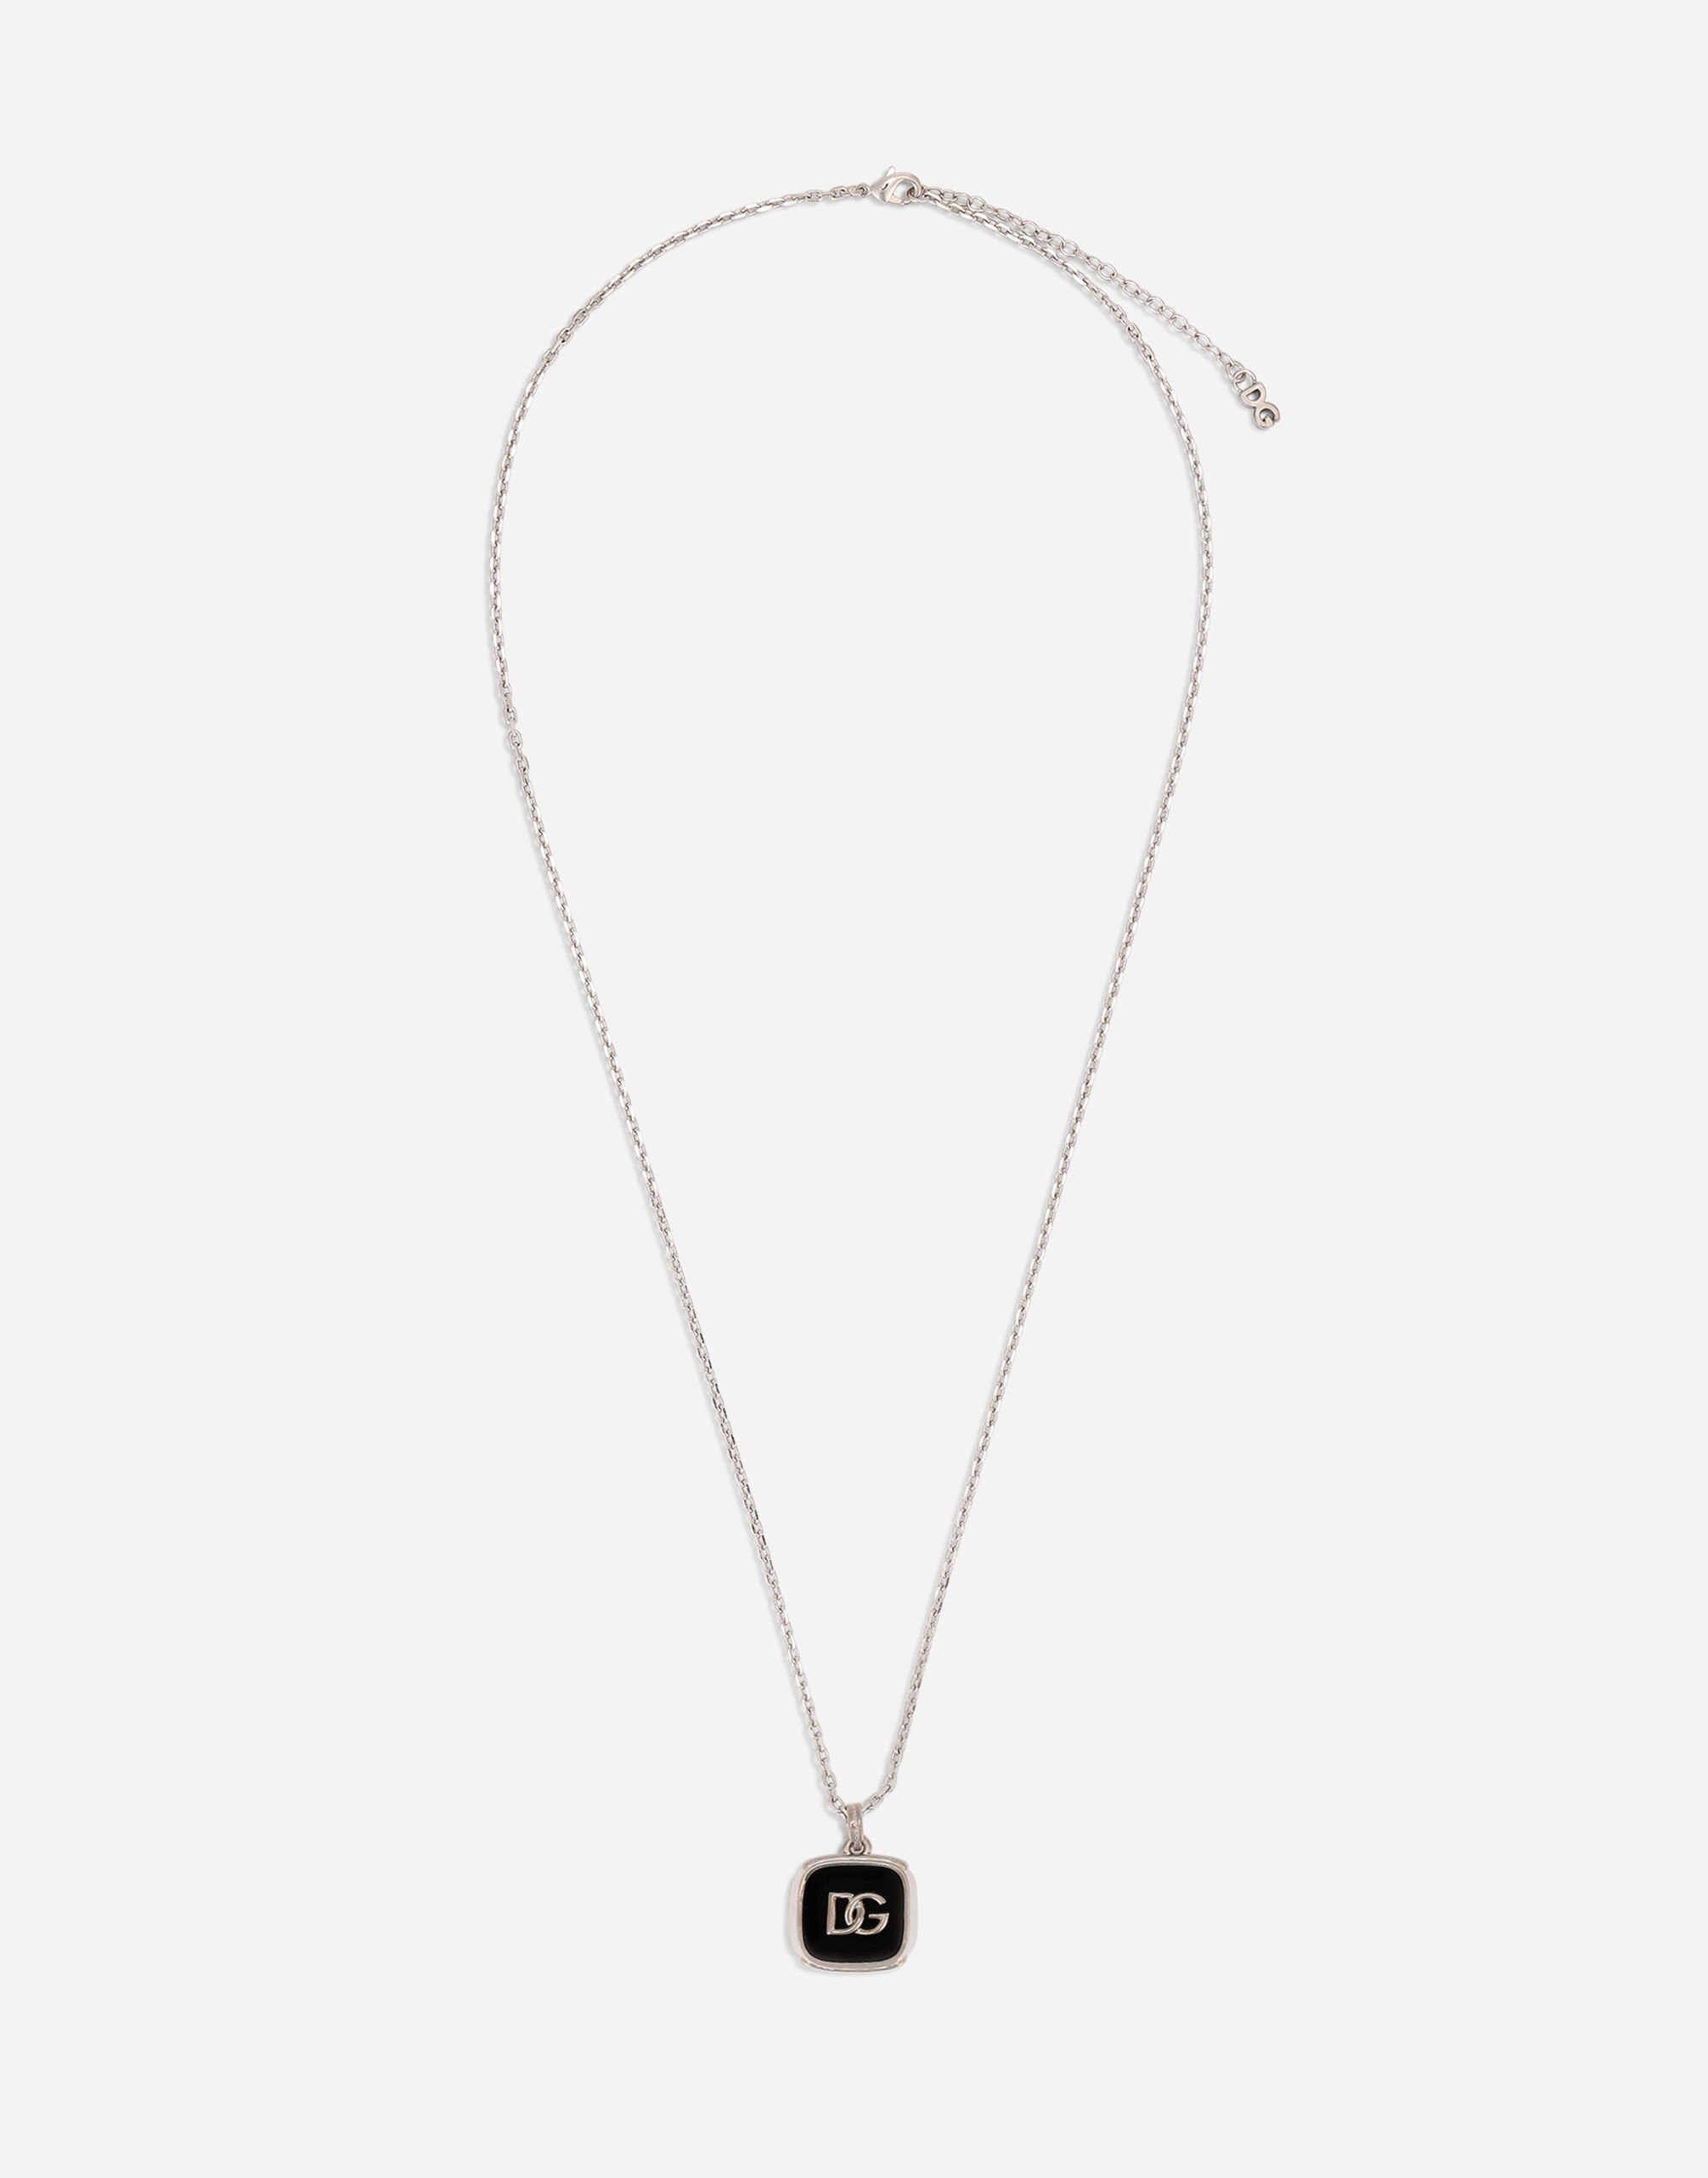 Dolce & Gabbana Necklace with enameled DG logo pendant Silver WBN5W1W1111